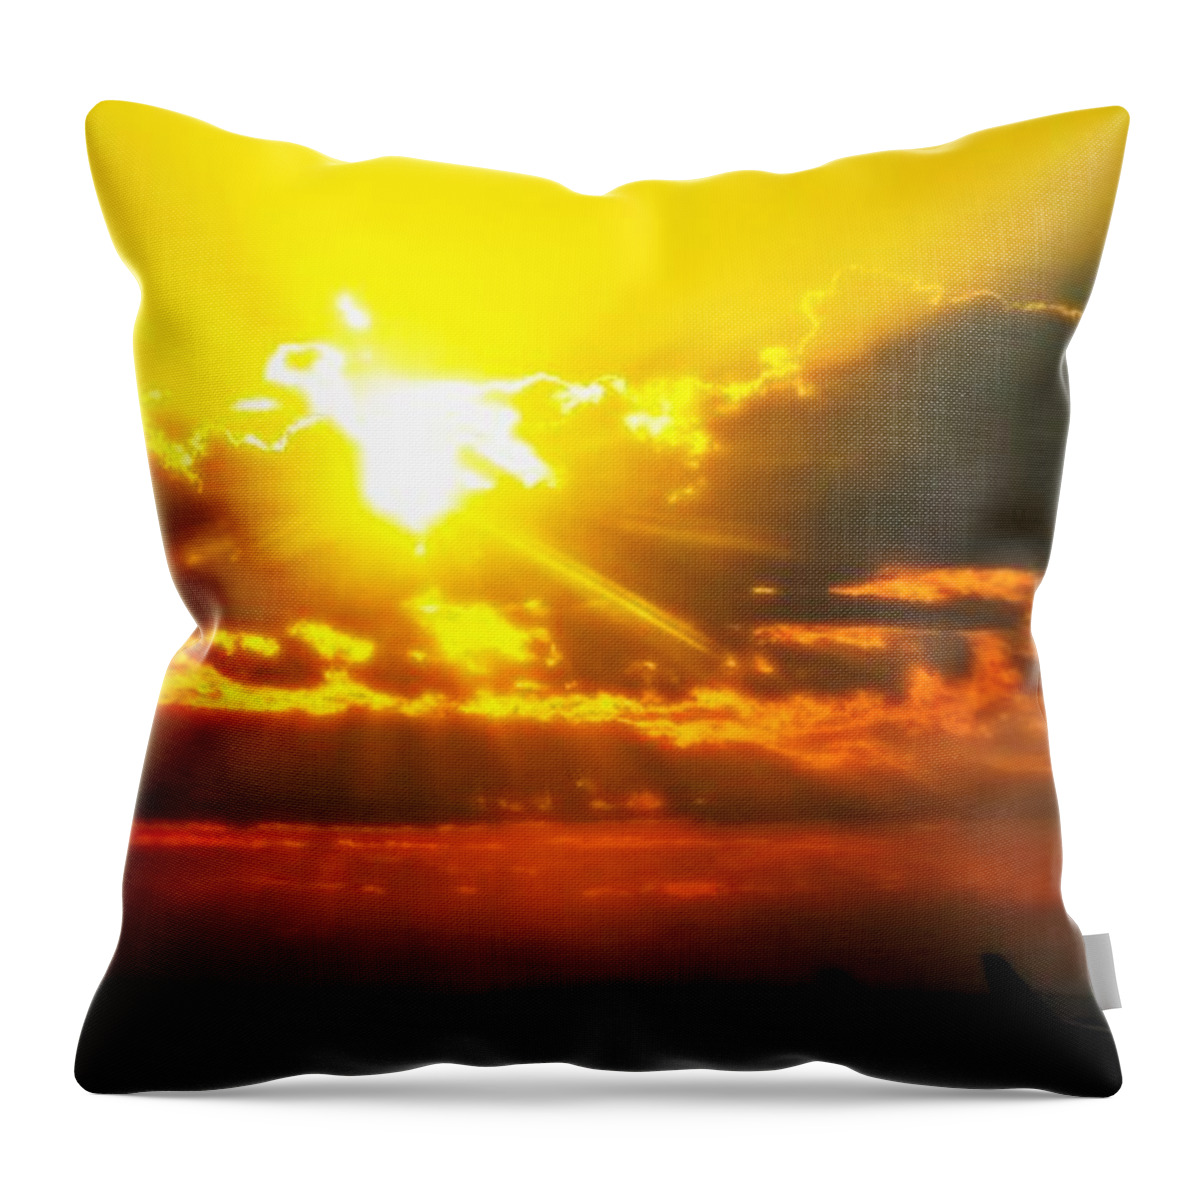 Mahlon Sweet Field Throw Pillow featuring the photograph Mahlon Sweet Sunset by Mindy Bench